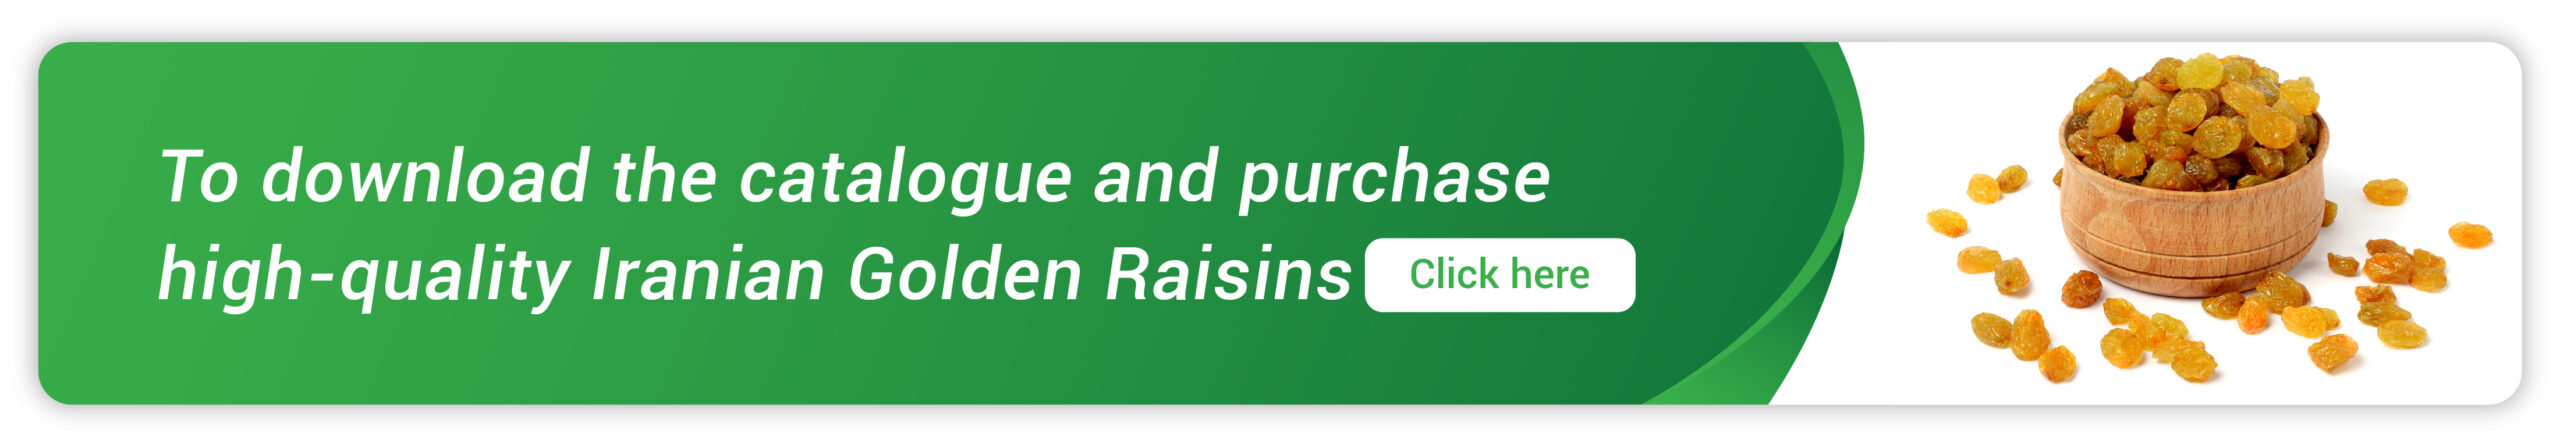 organic golden raisins